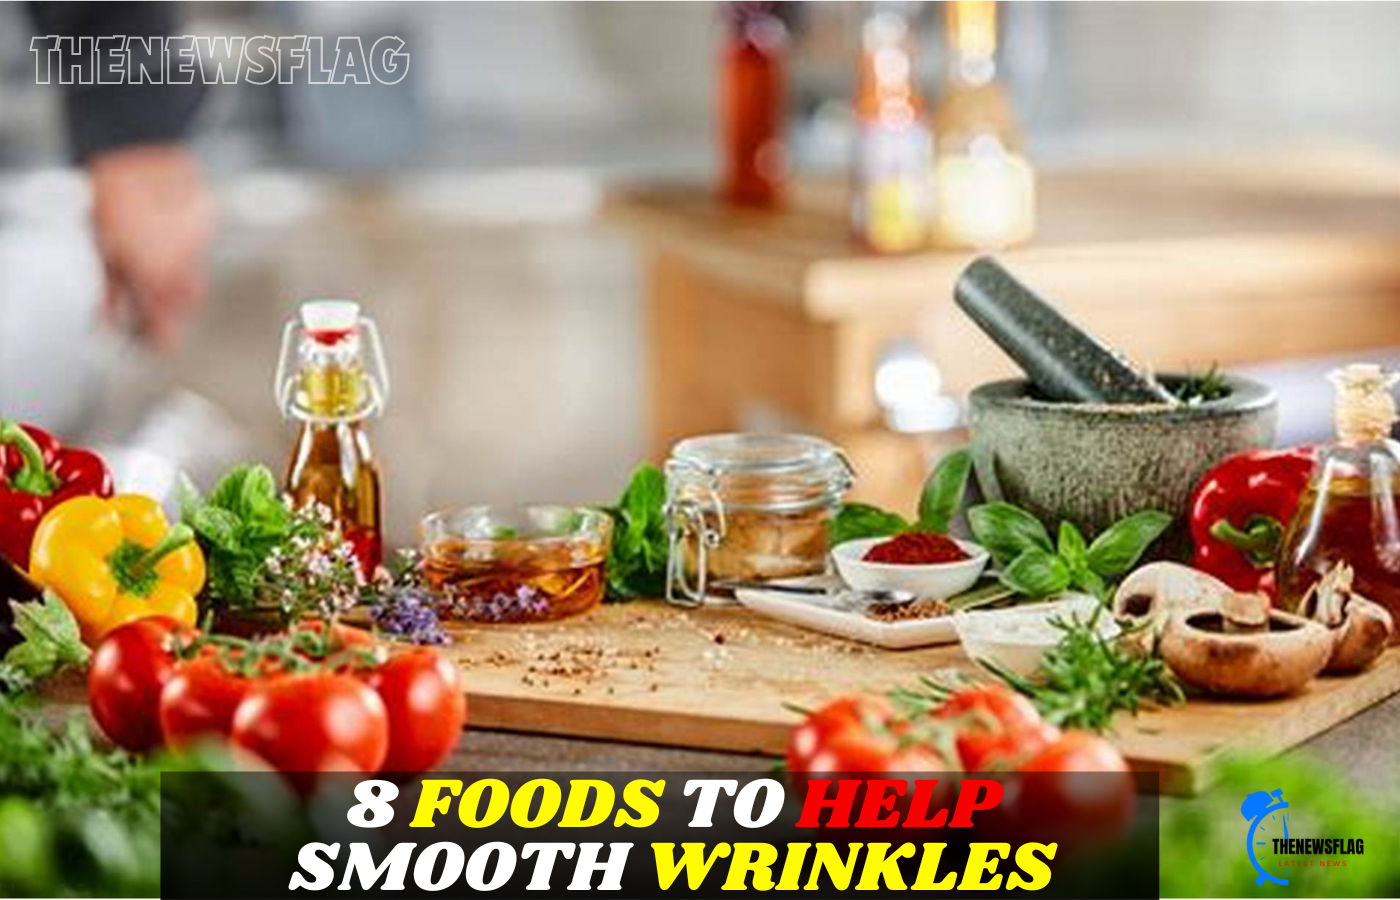 Doctors Suggest 8 Foods to Help Smooth Wrinkles